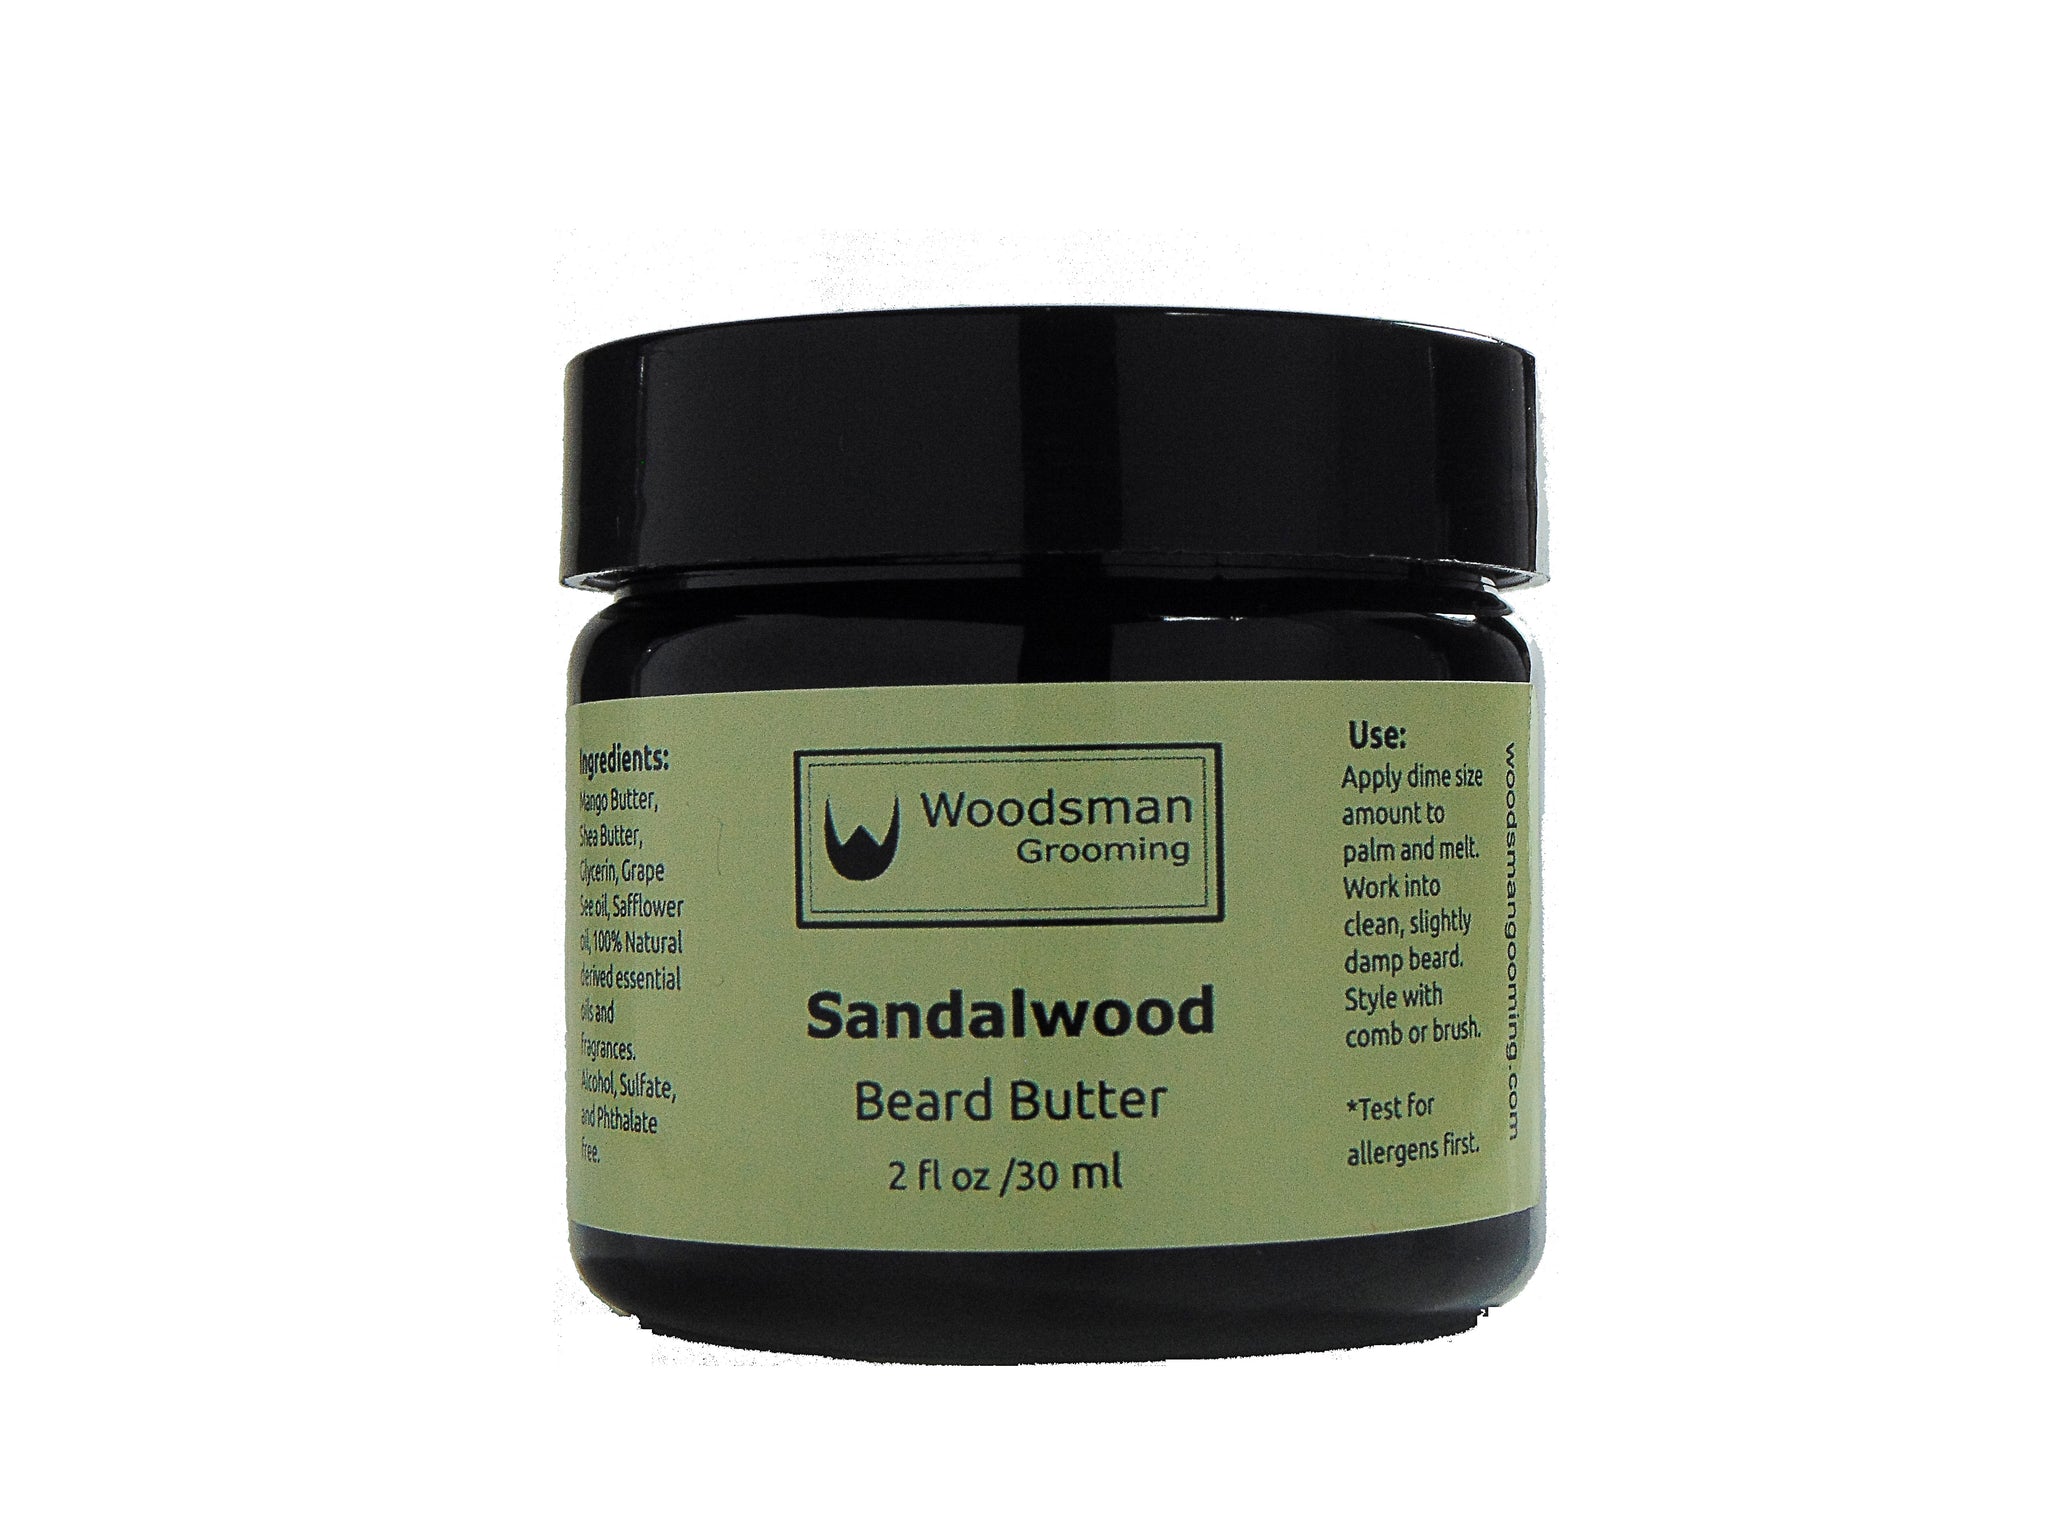 Sandalwood Beard Butter